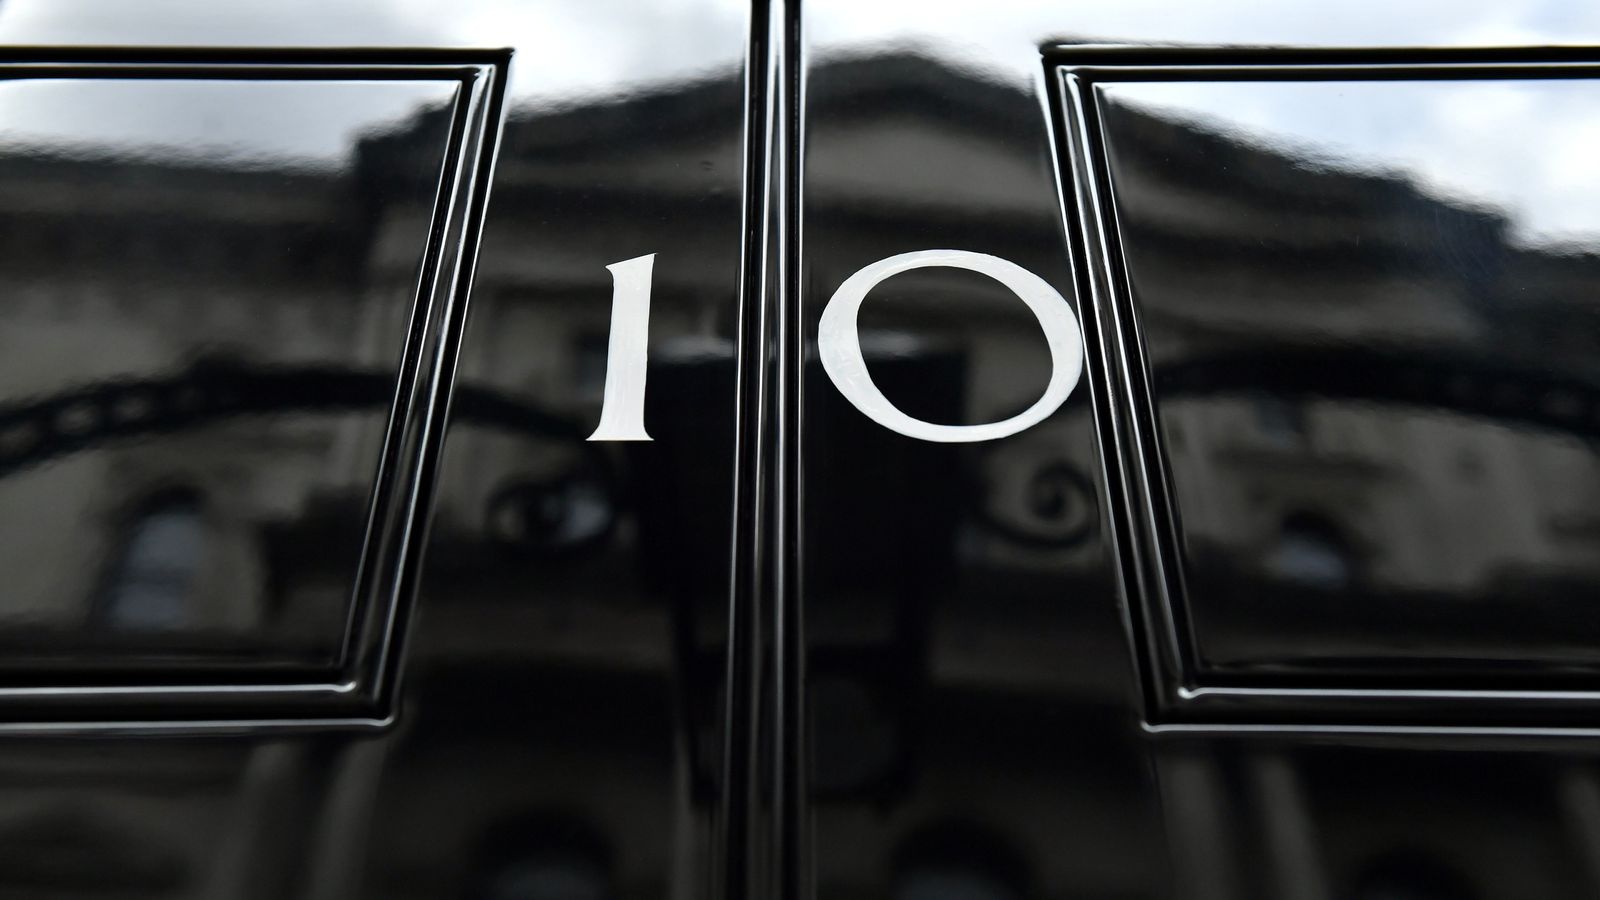 Boris Johnson’s resignation fires up the Conservative leadership race to replace him |  politics news